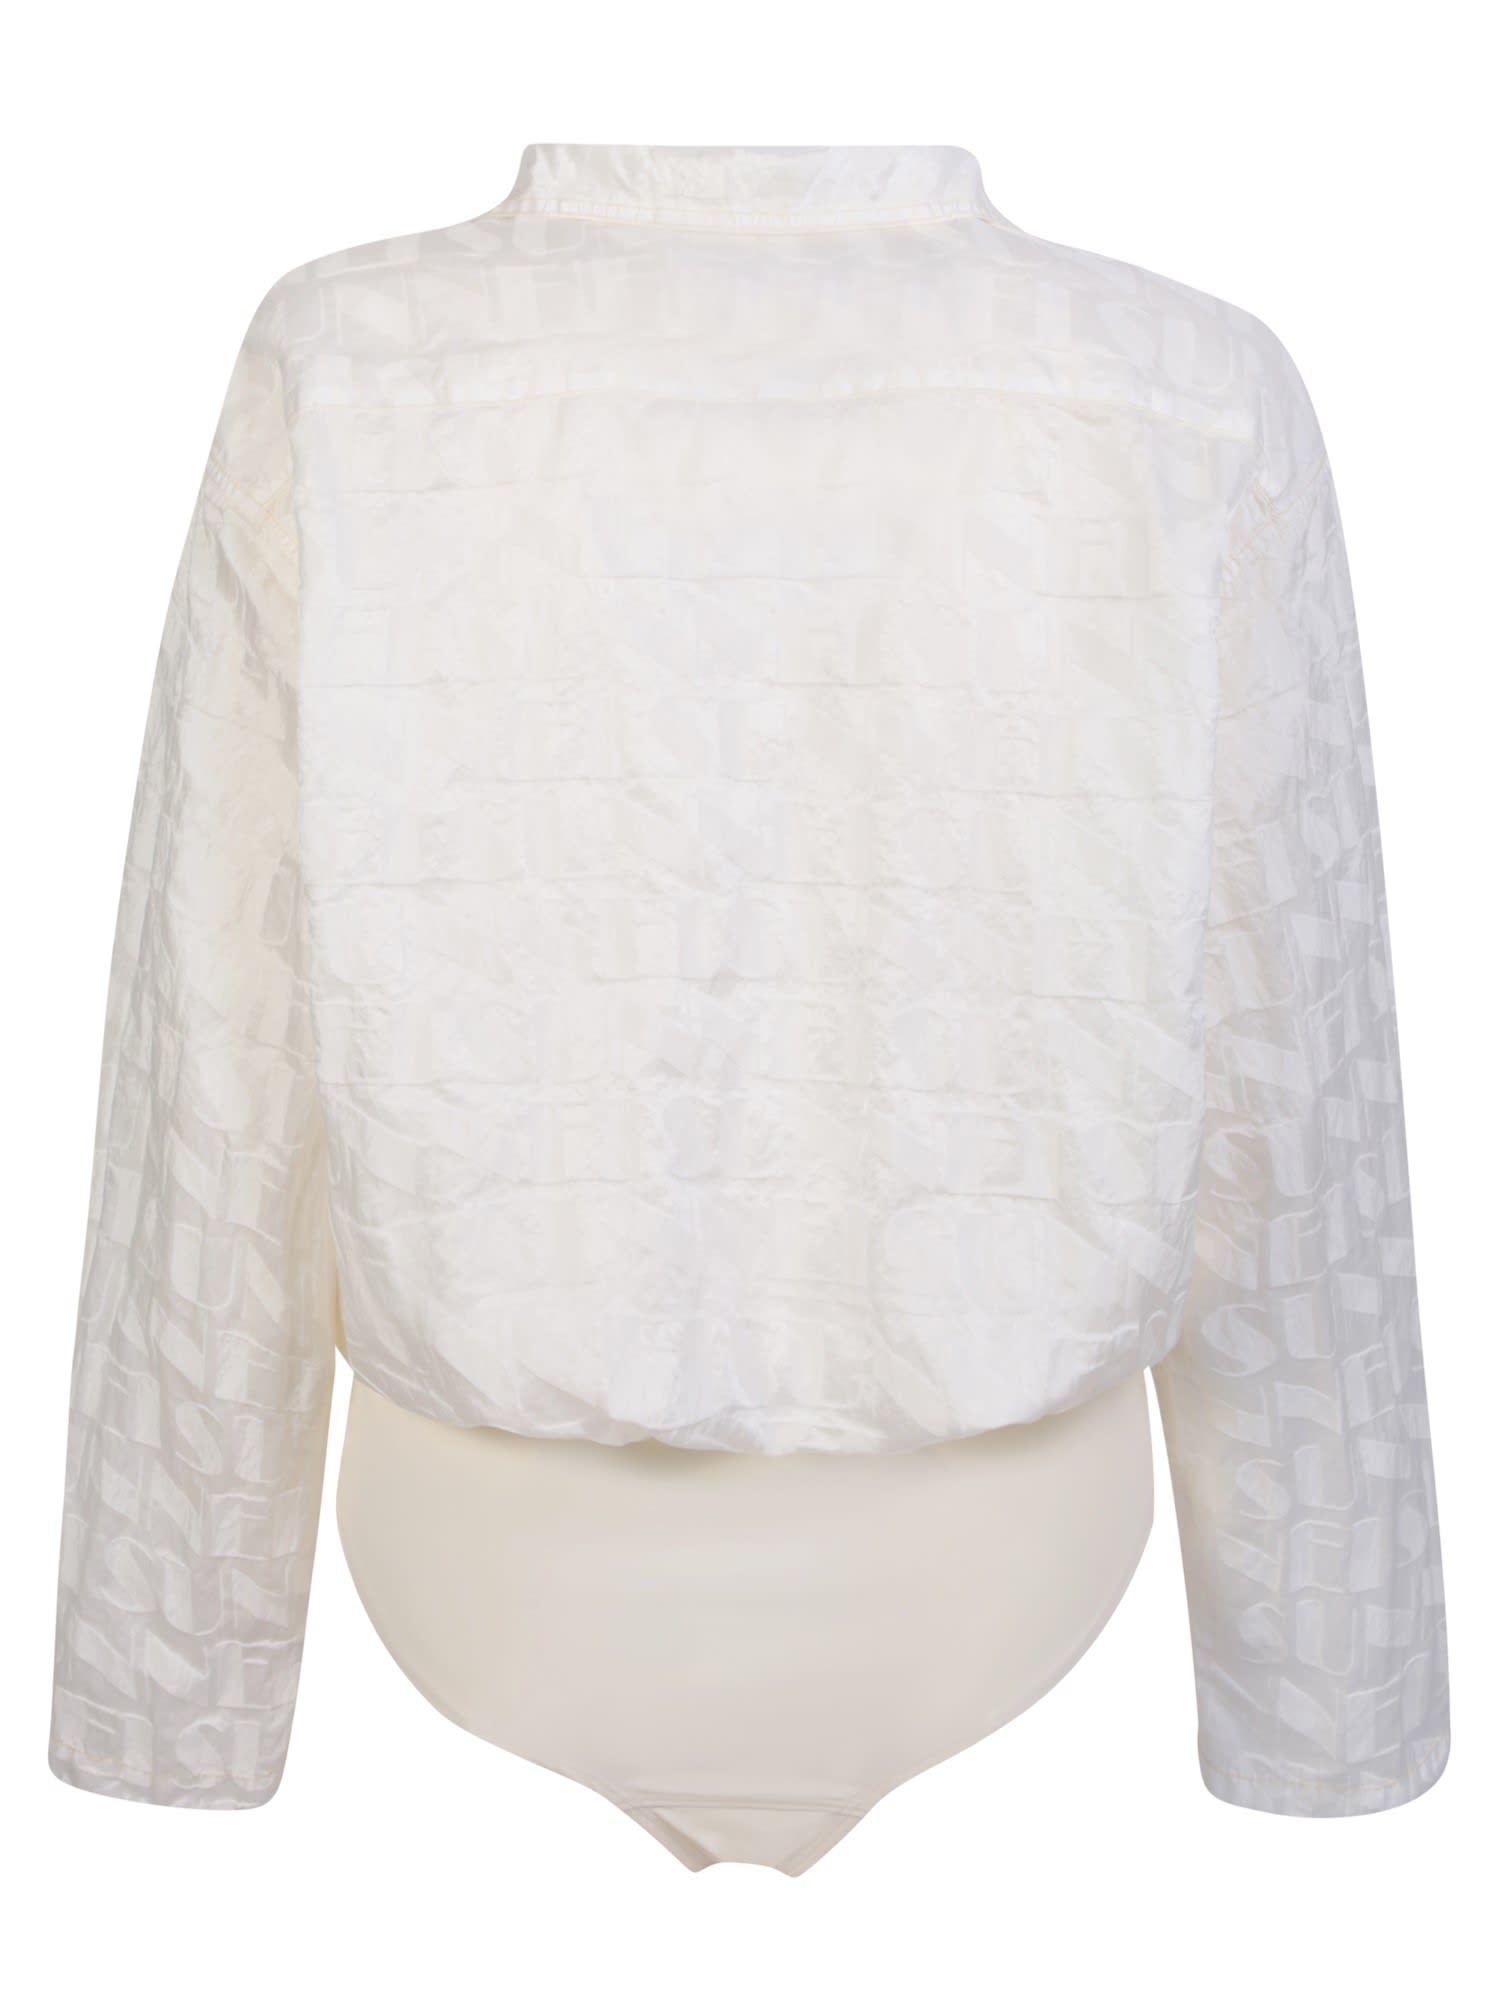 Shop Sunnei Jacquard Shirt Bodysuit In Cream In White